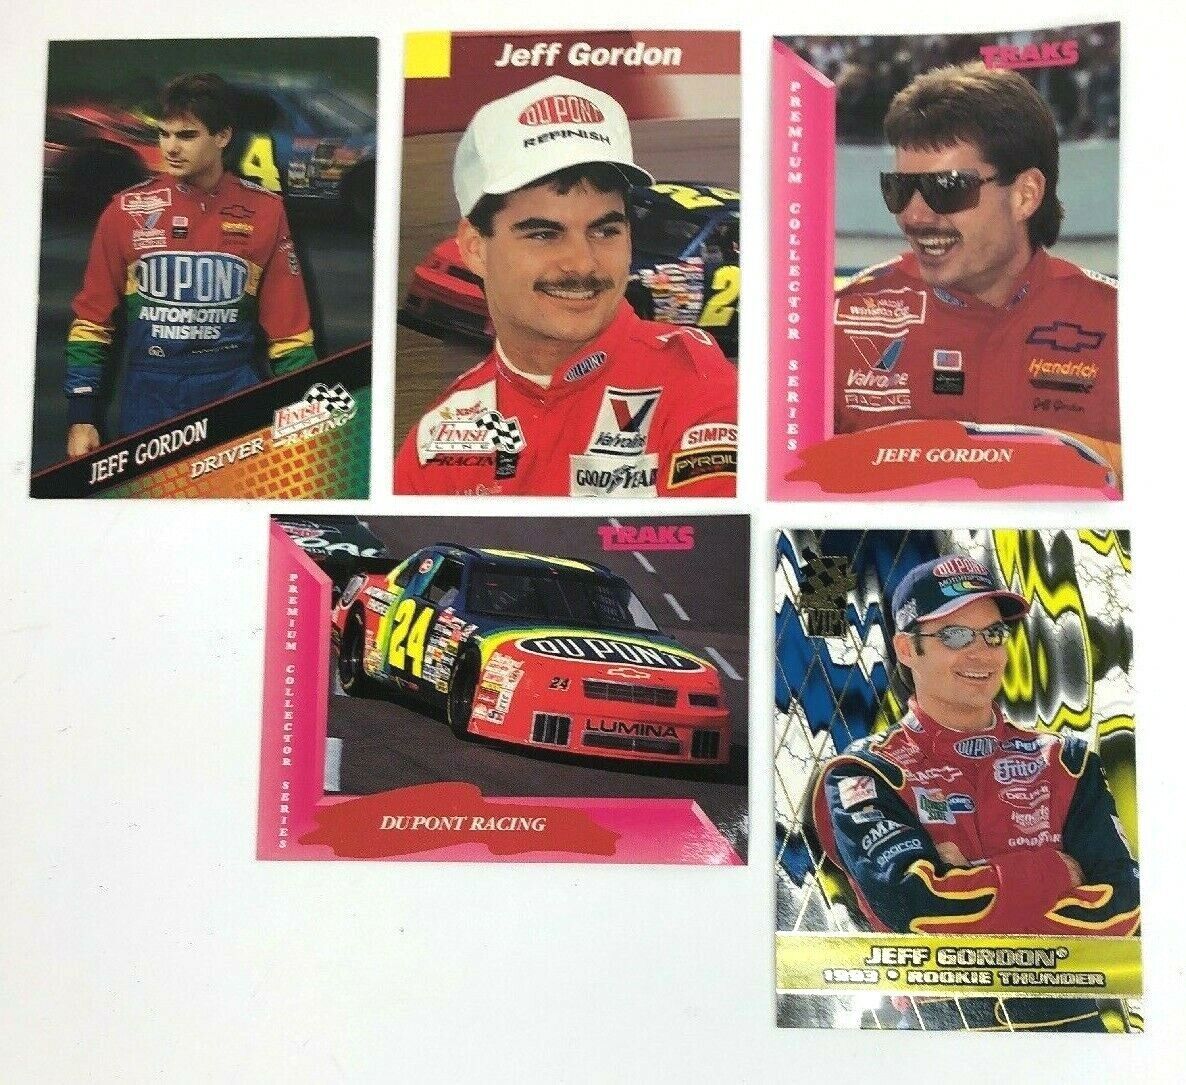 Jeff Gordon1993 Traks Pro Set Press Pass 5 Card Vintage NASCAR - $9.49